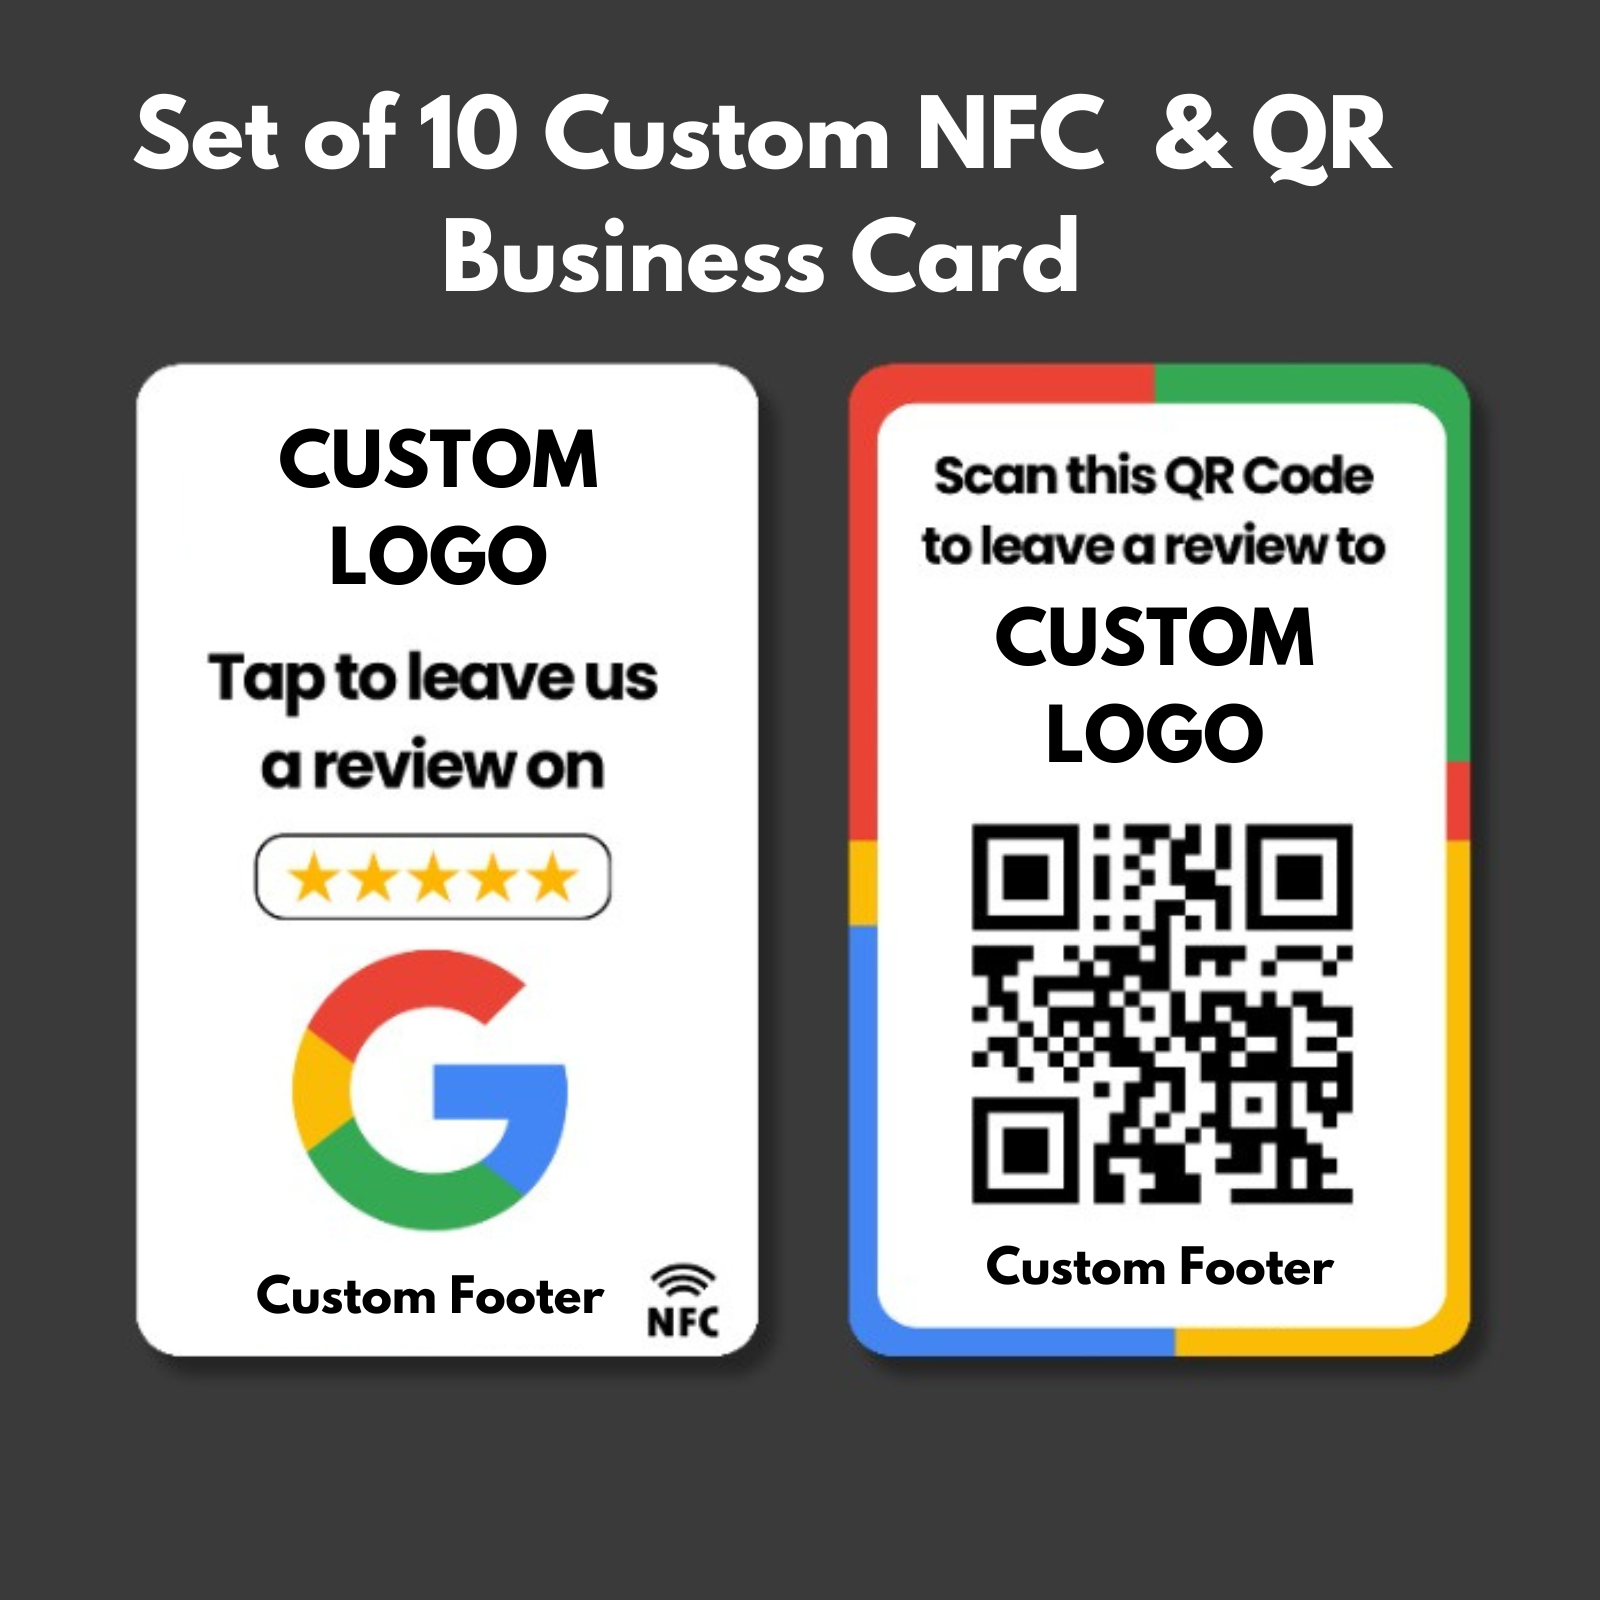 Set of 10 Custom NFC & QR Business Card